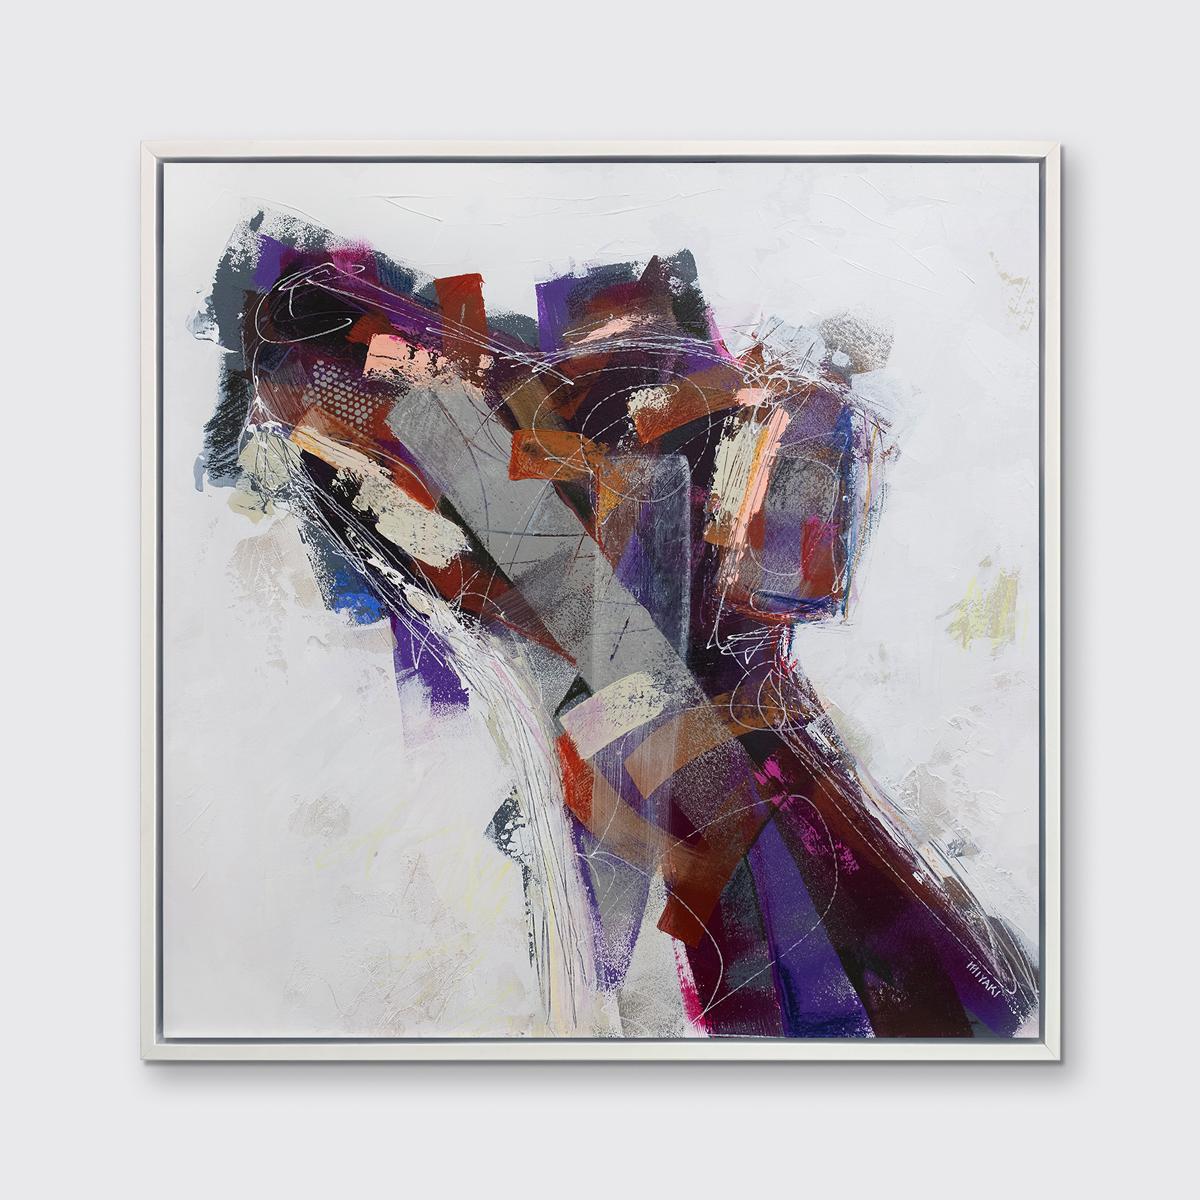 « Colorful Basenji » Impression giclée en édition limitée, 53